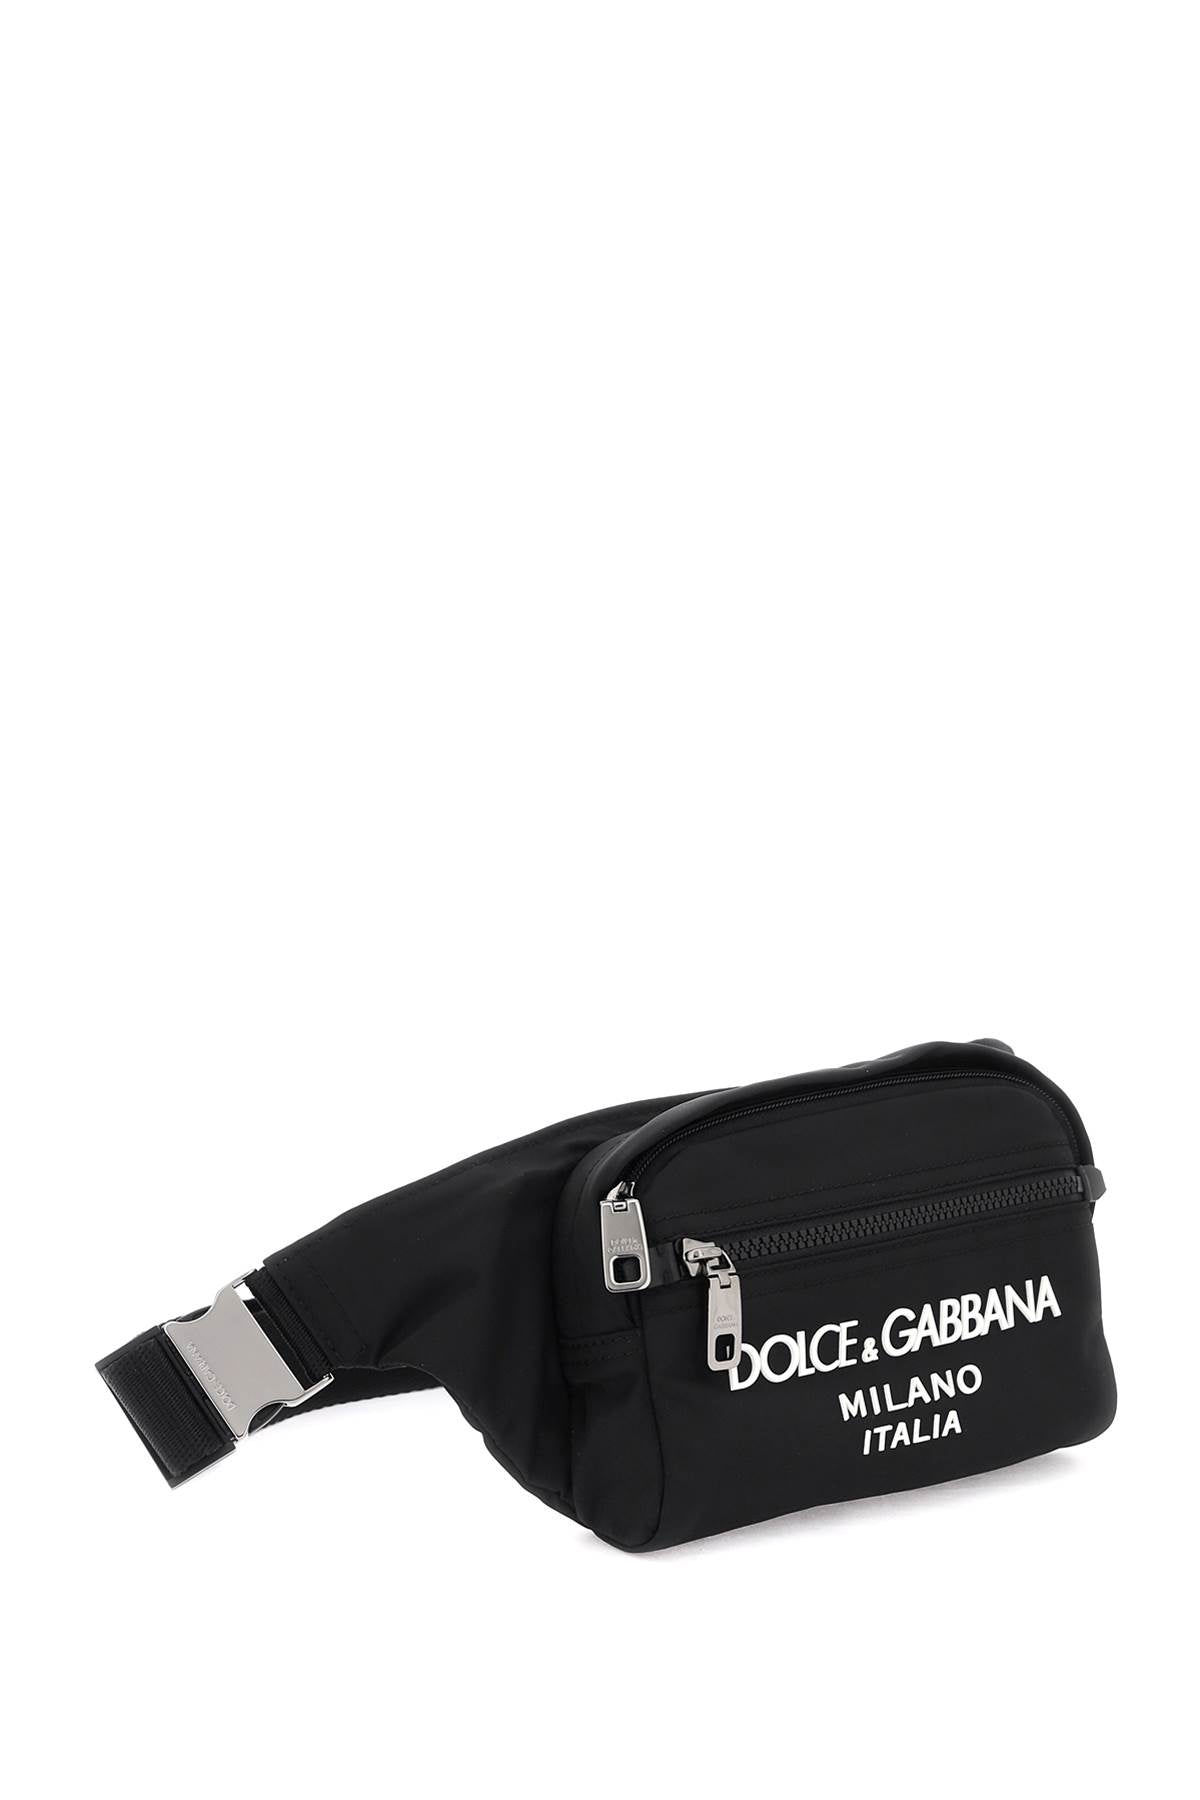 Dolce & Gabbana Nylon Beltpack Bag With Logo   Nero